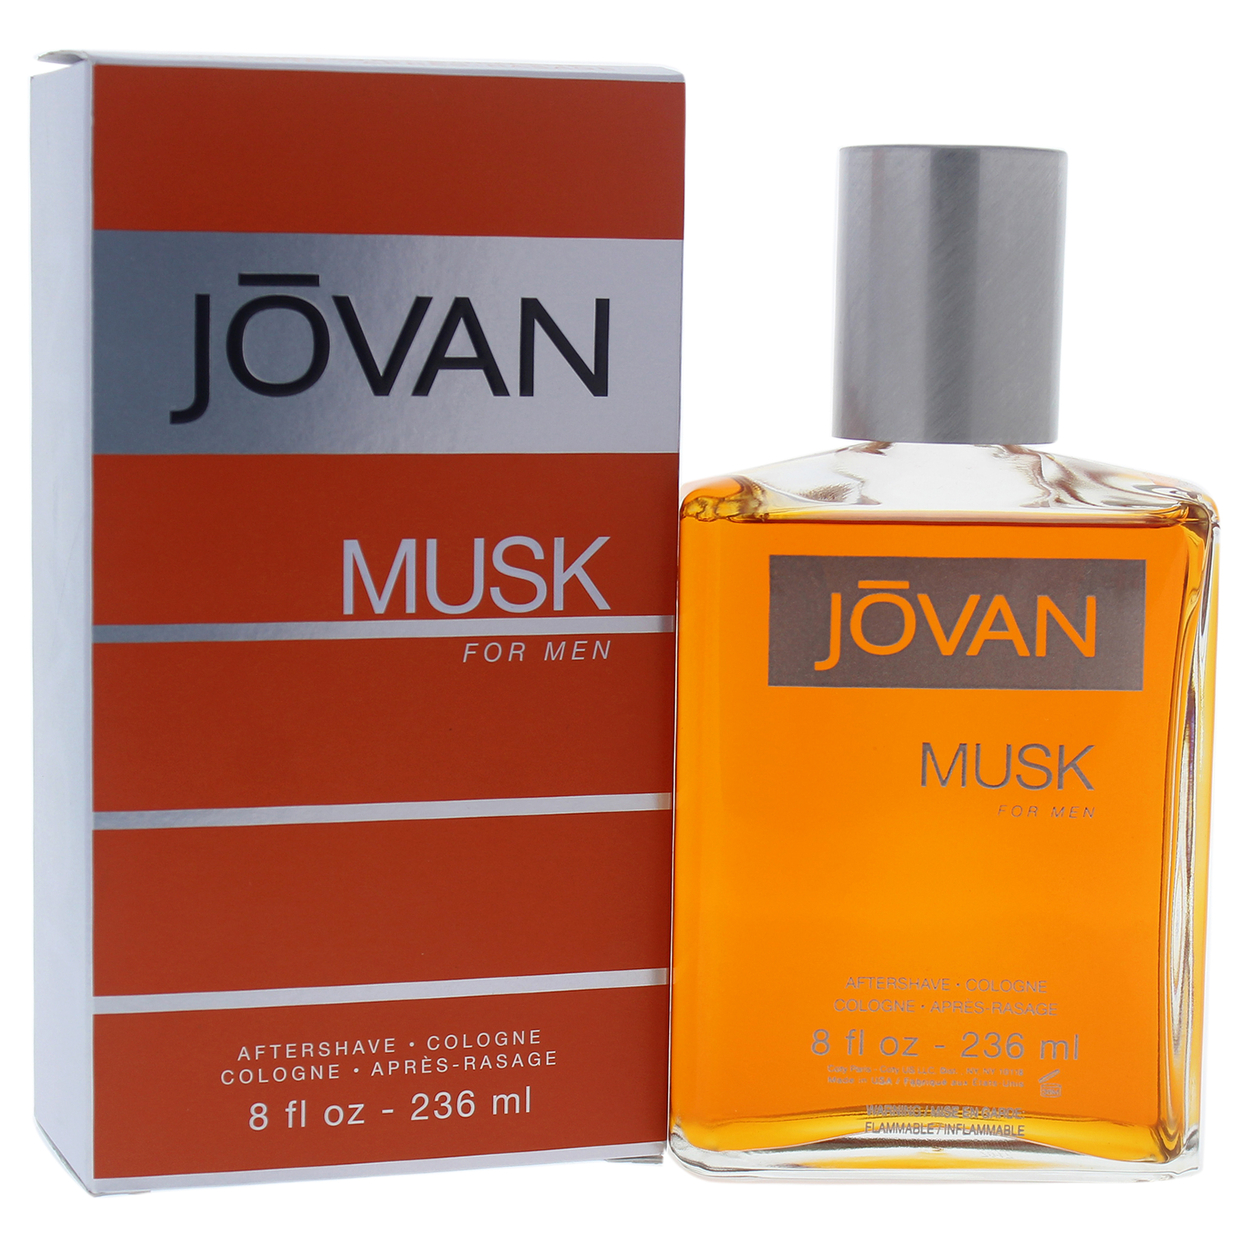 Jovan Musk Cologne for Men, 8 fl oz Full Size - image 1 of 3